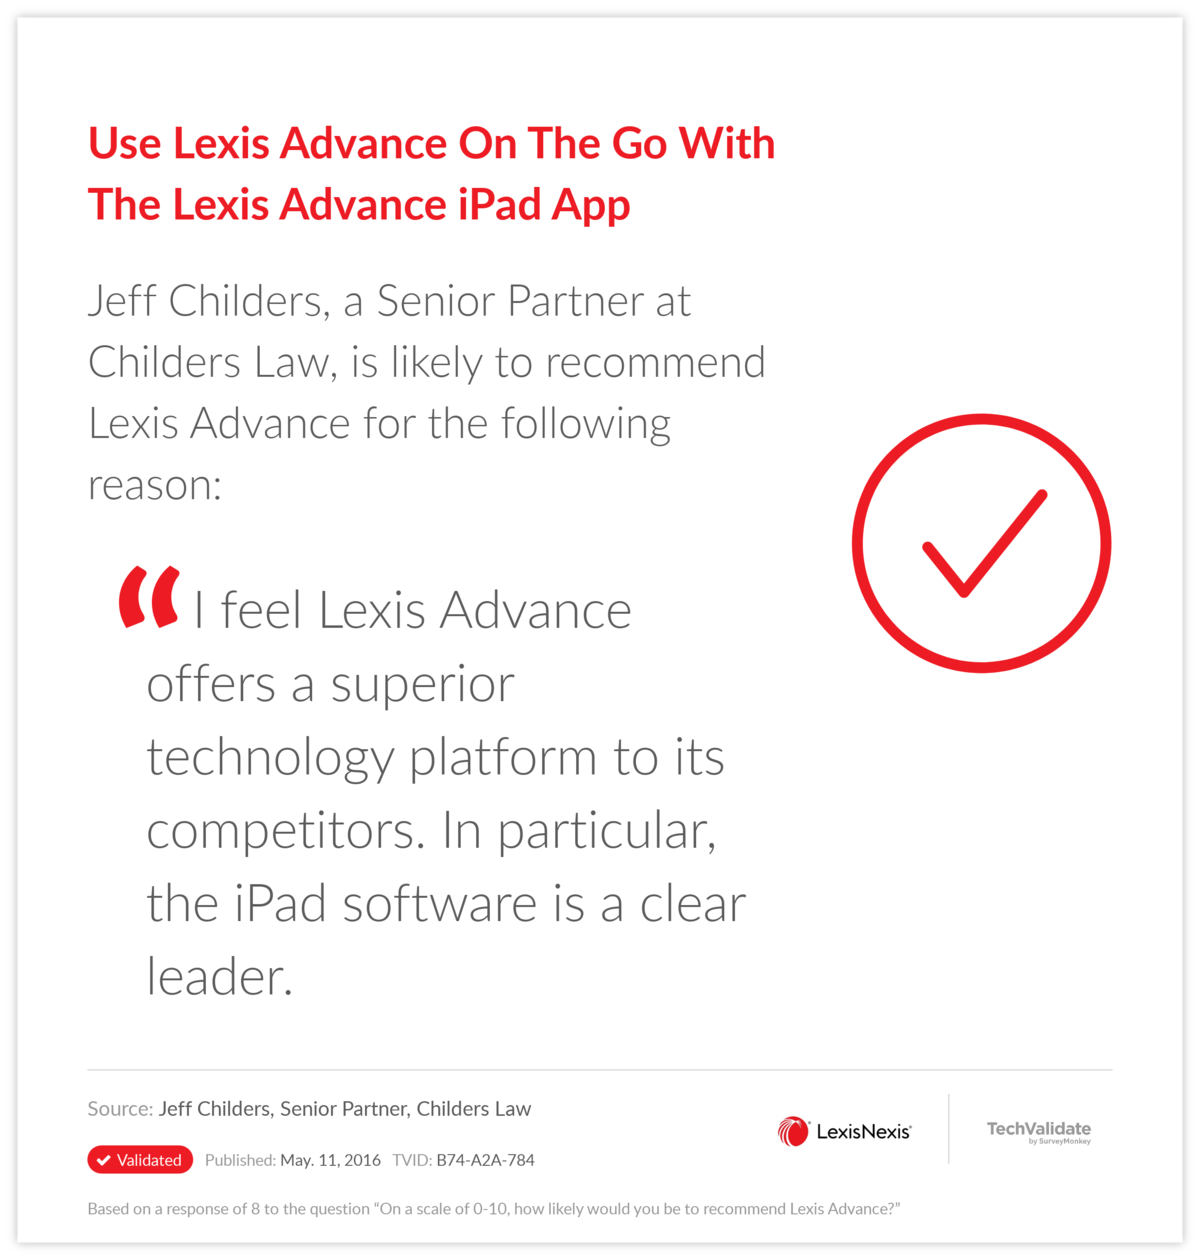 Use Lexis Advance On The Go With The Lexis Advance iPad App